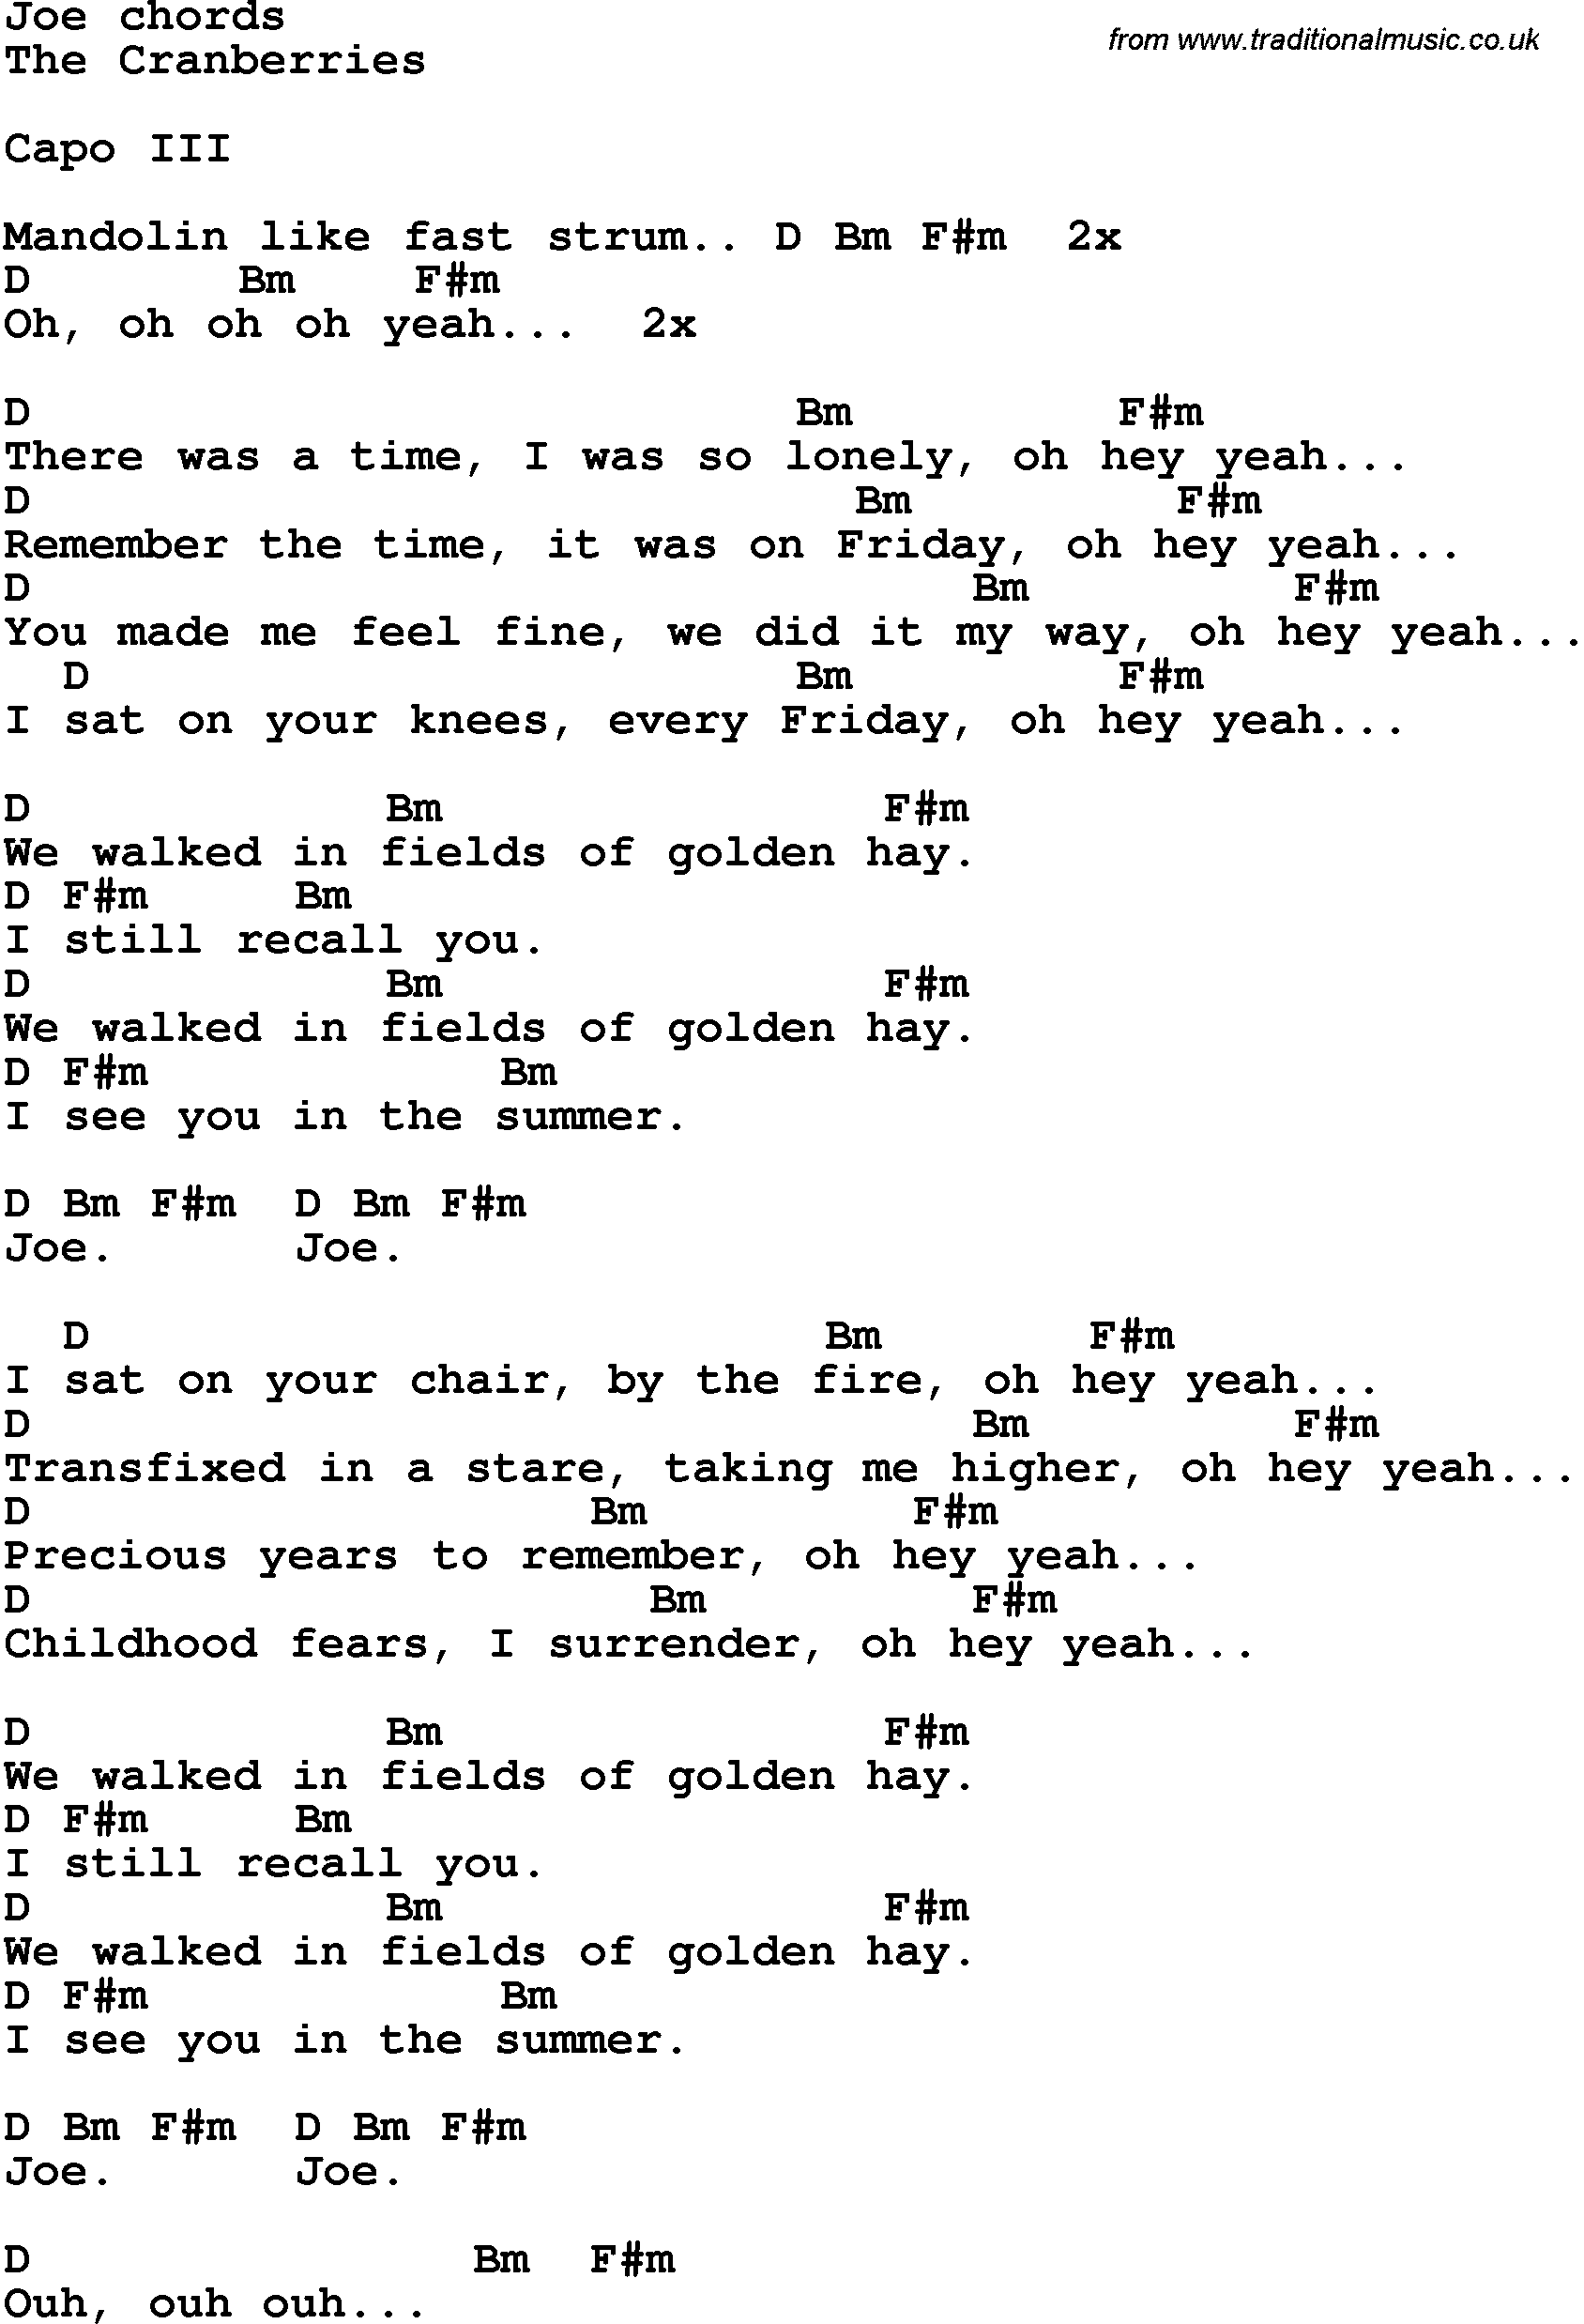 Song Lyrics with guitar chords for Joe